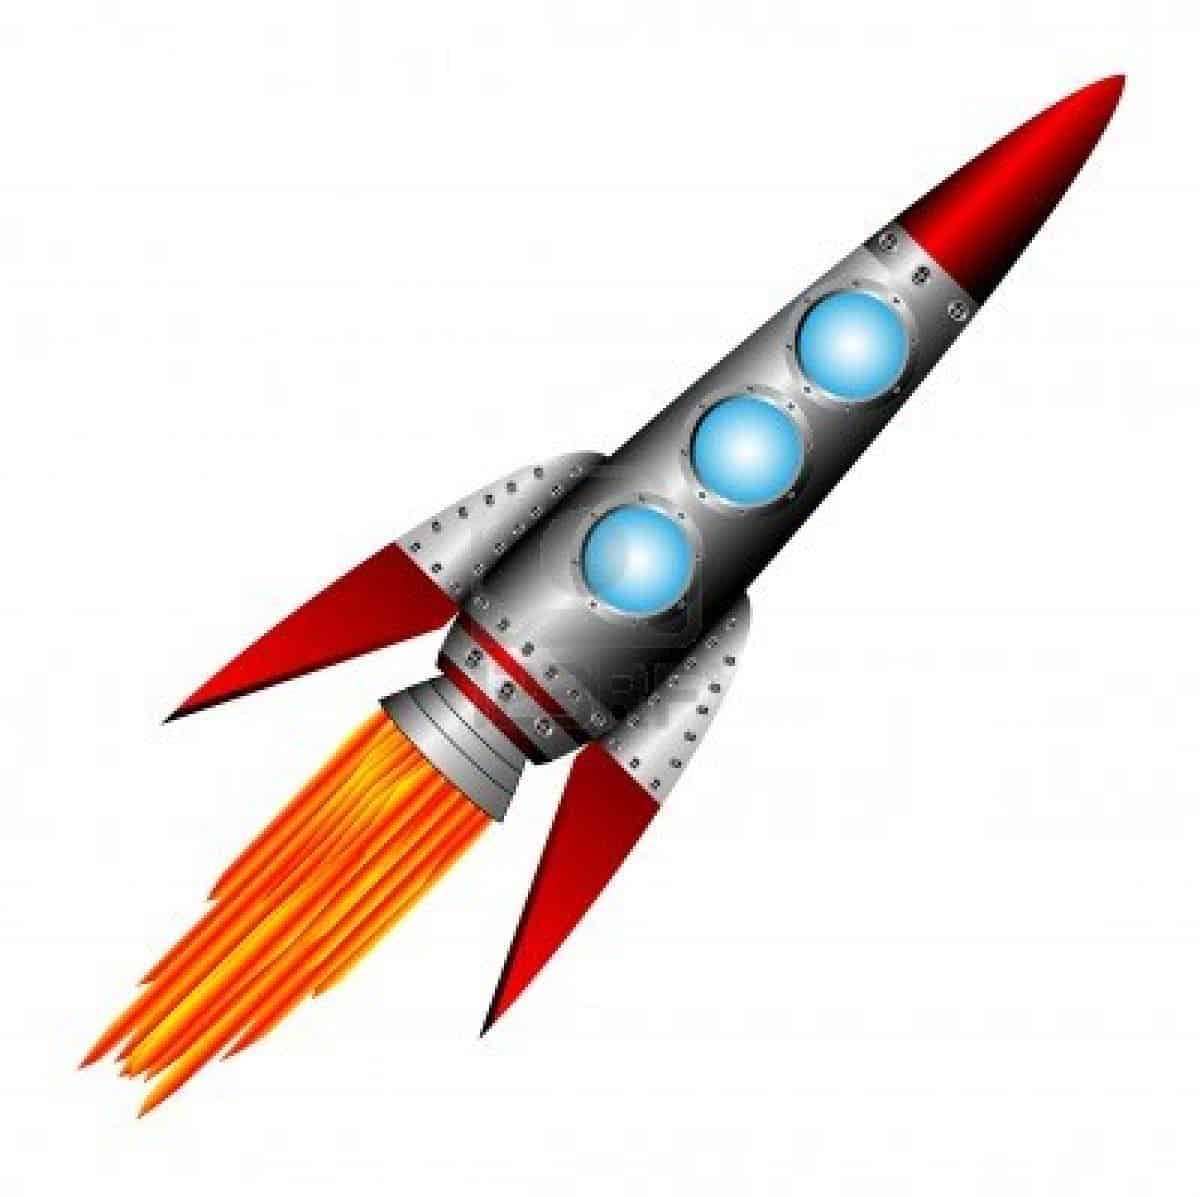 10946122-starting-rocket-on-white-background--vector-illustration